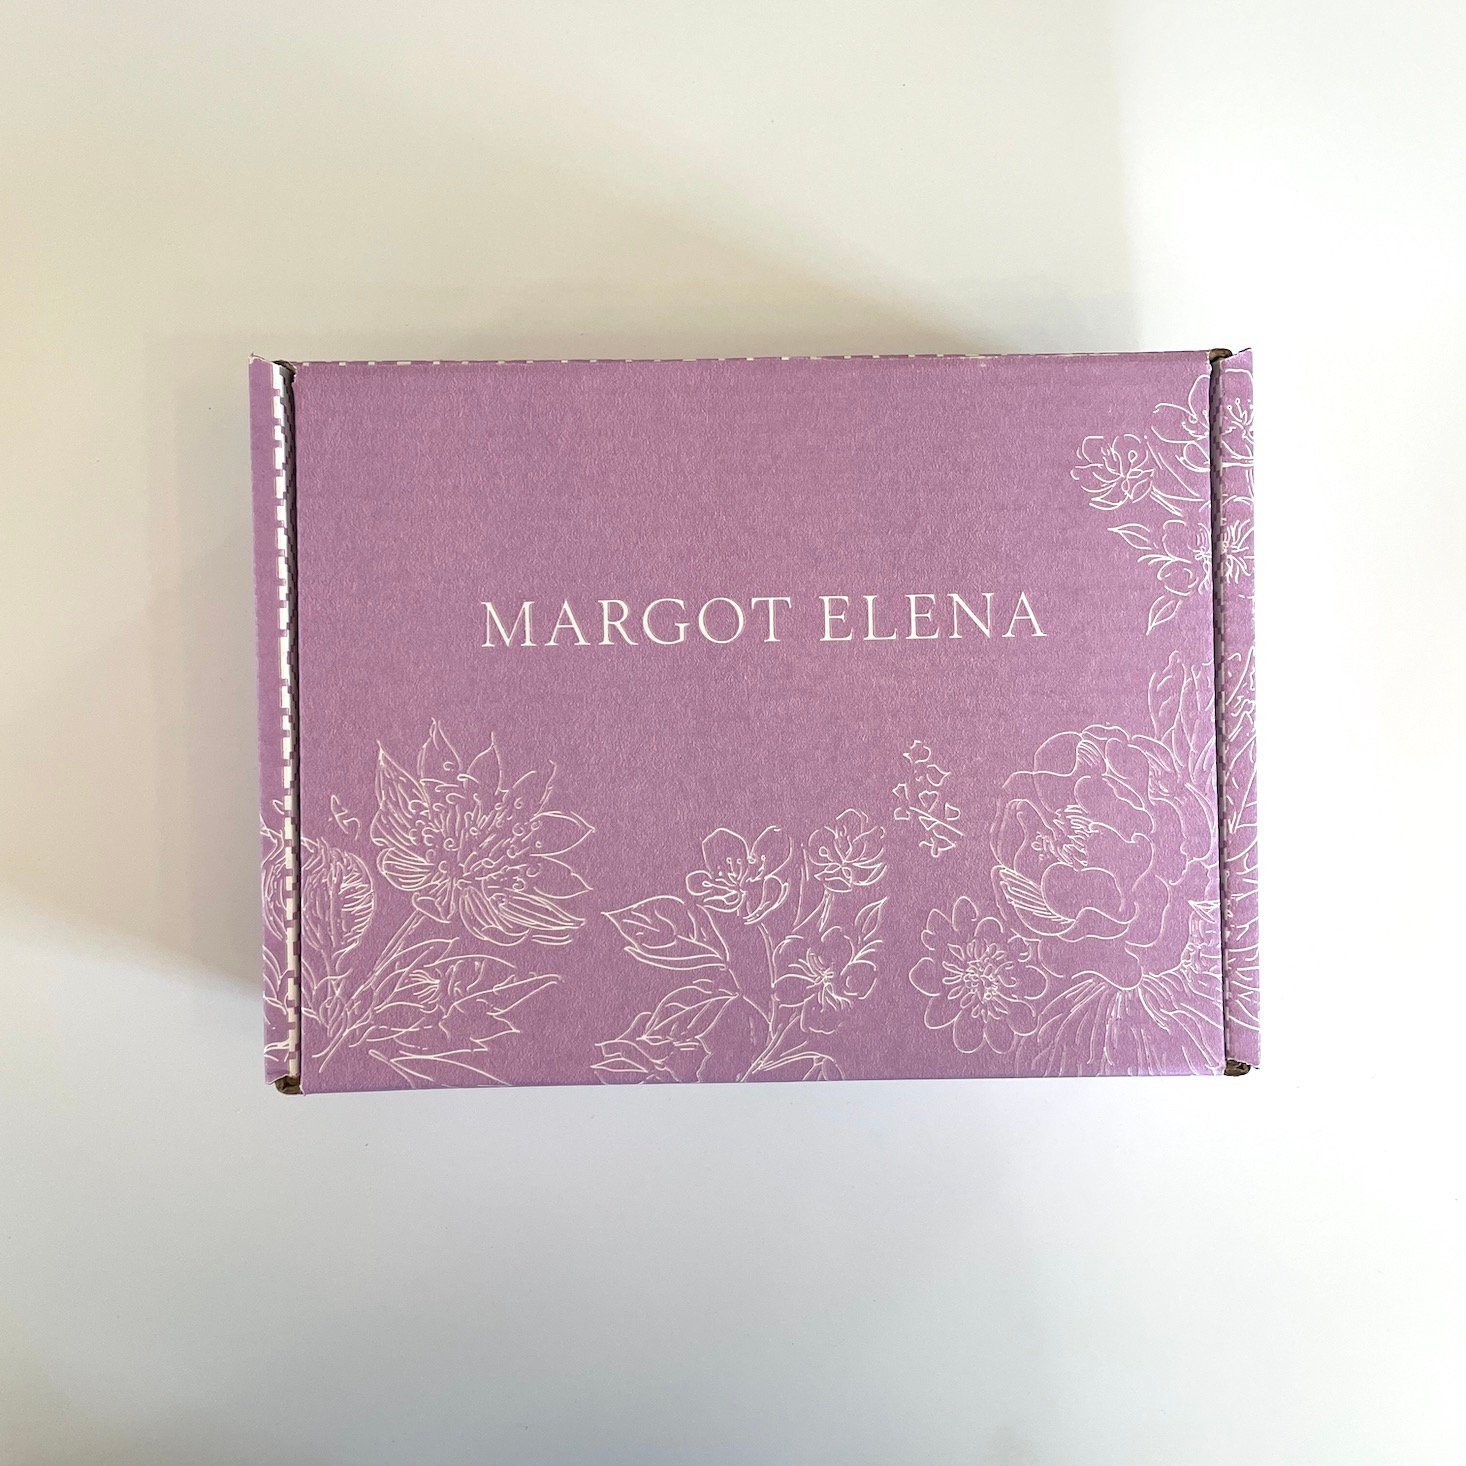 Margot Elena Subscription Box Winter 2022 Review + Exclusive MSA Coupon